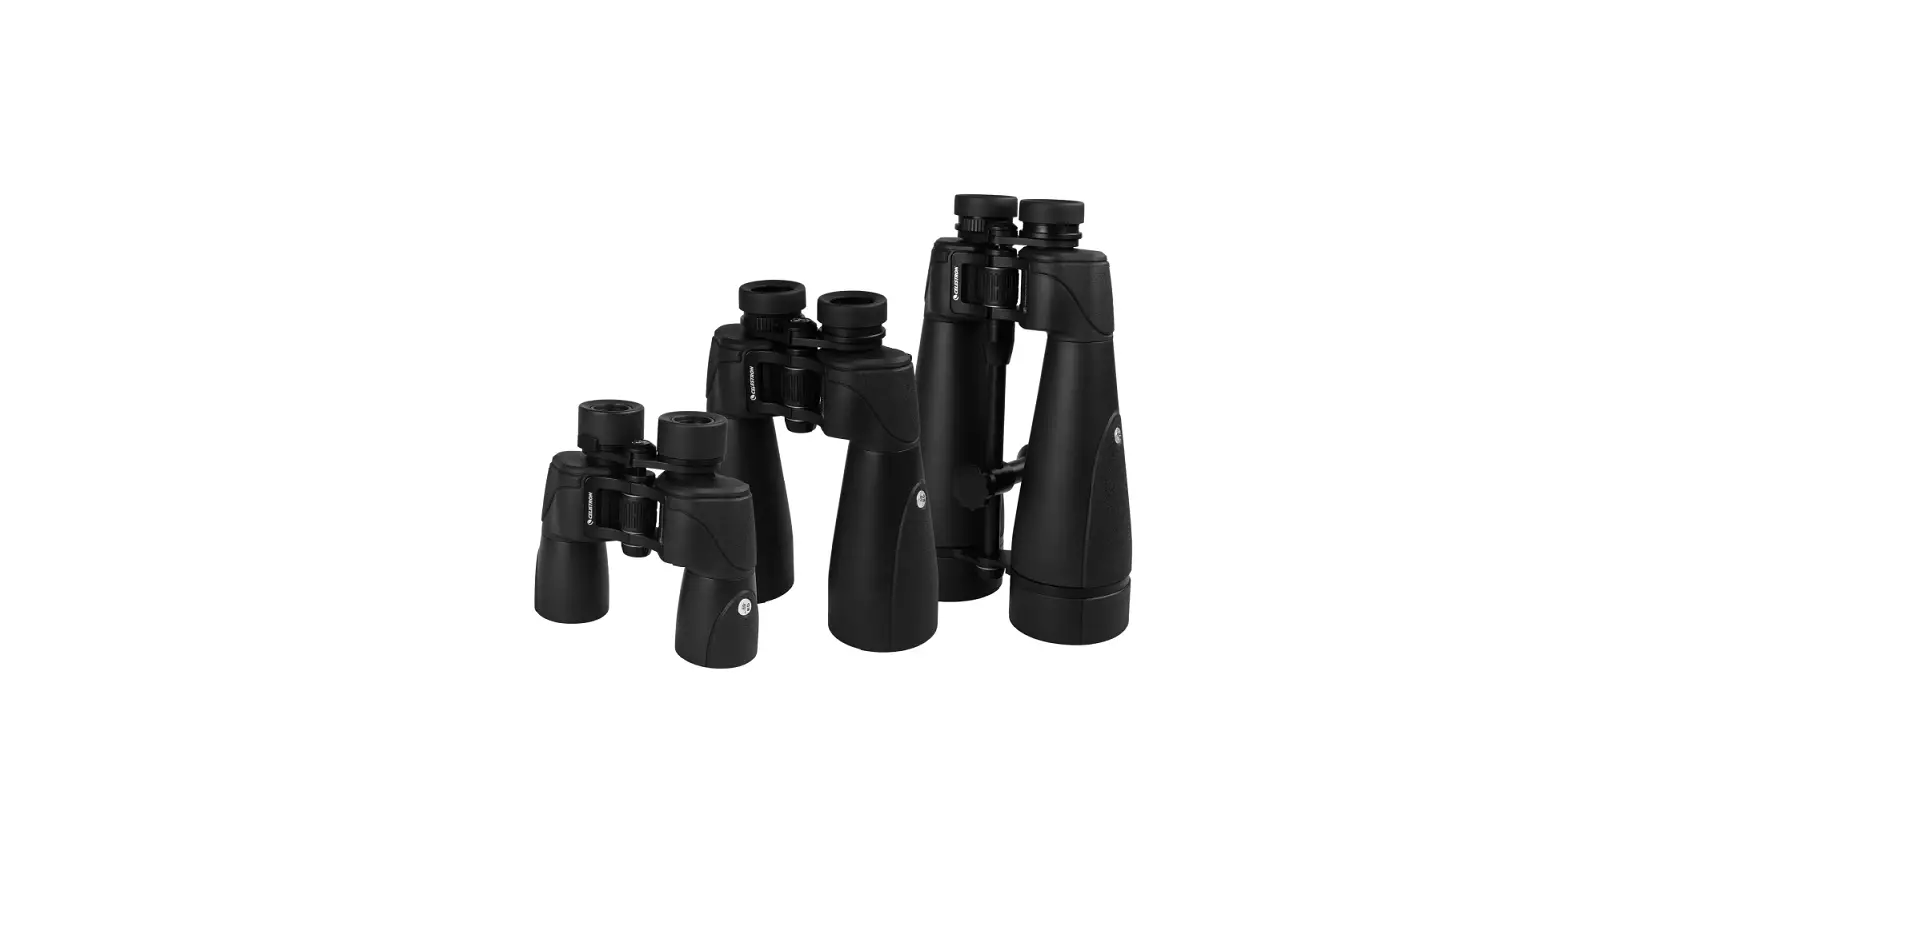 72033, 72034, 72035 SKYMASTER Pro Binoculars